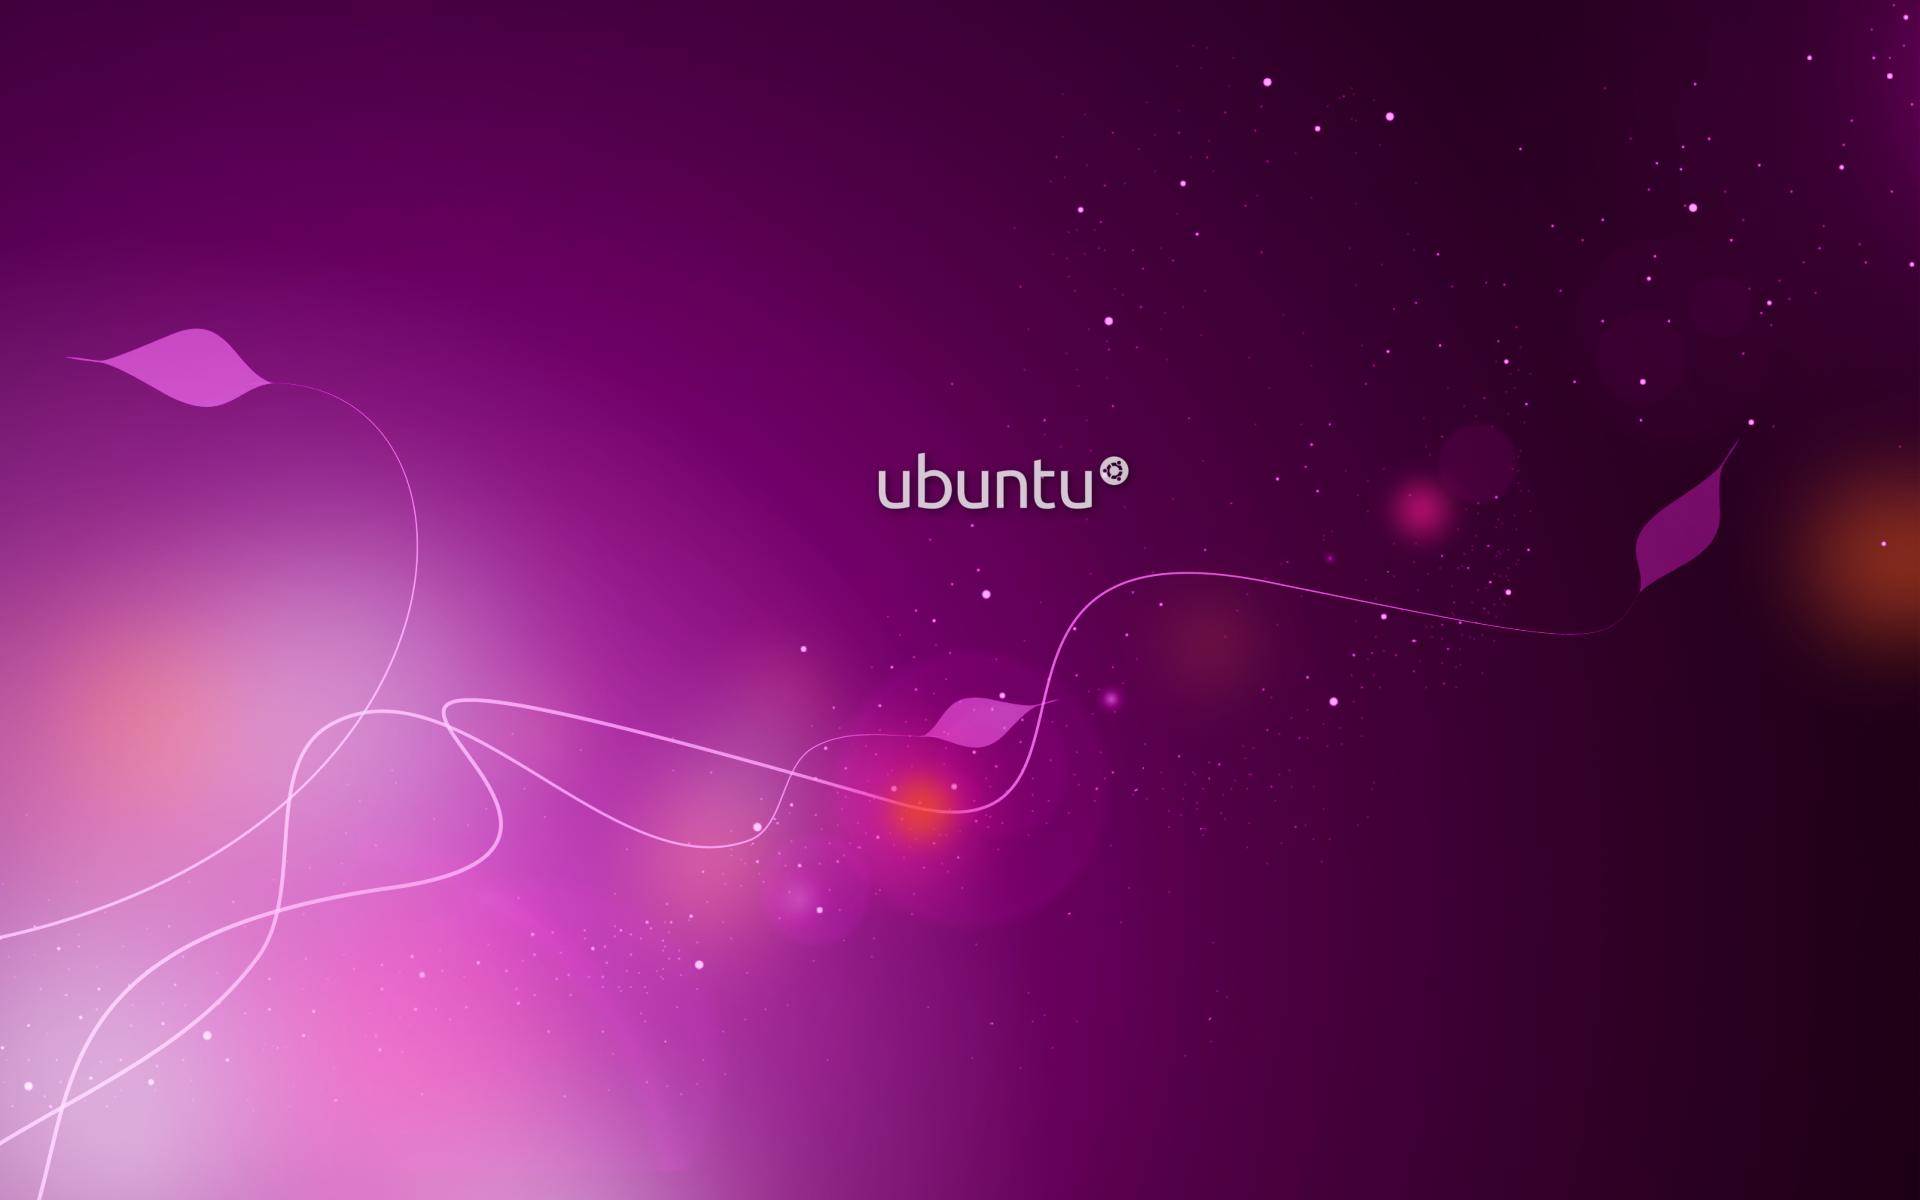 ubuntu_hd_wallpaper_